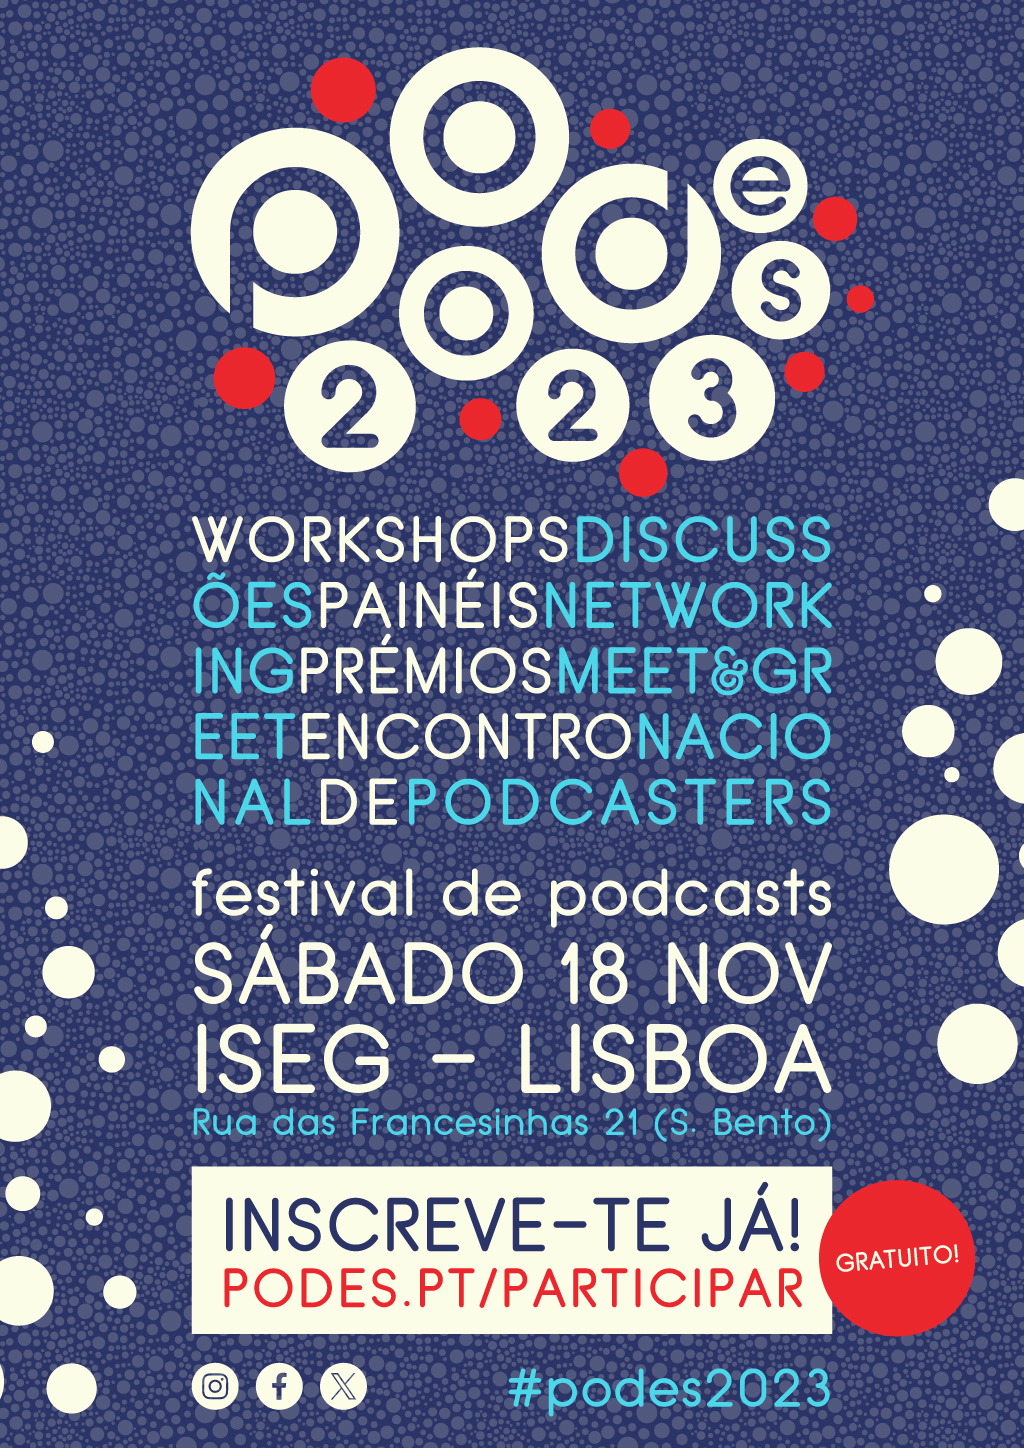 PODES – Festival de Podcasts